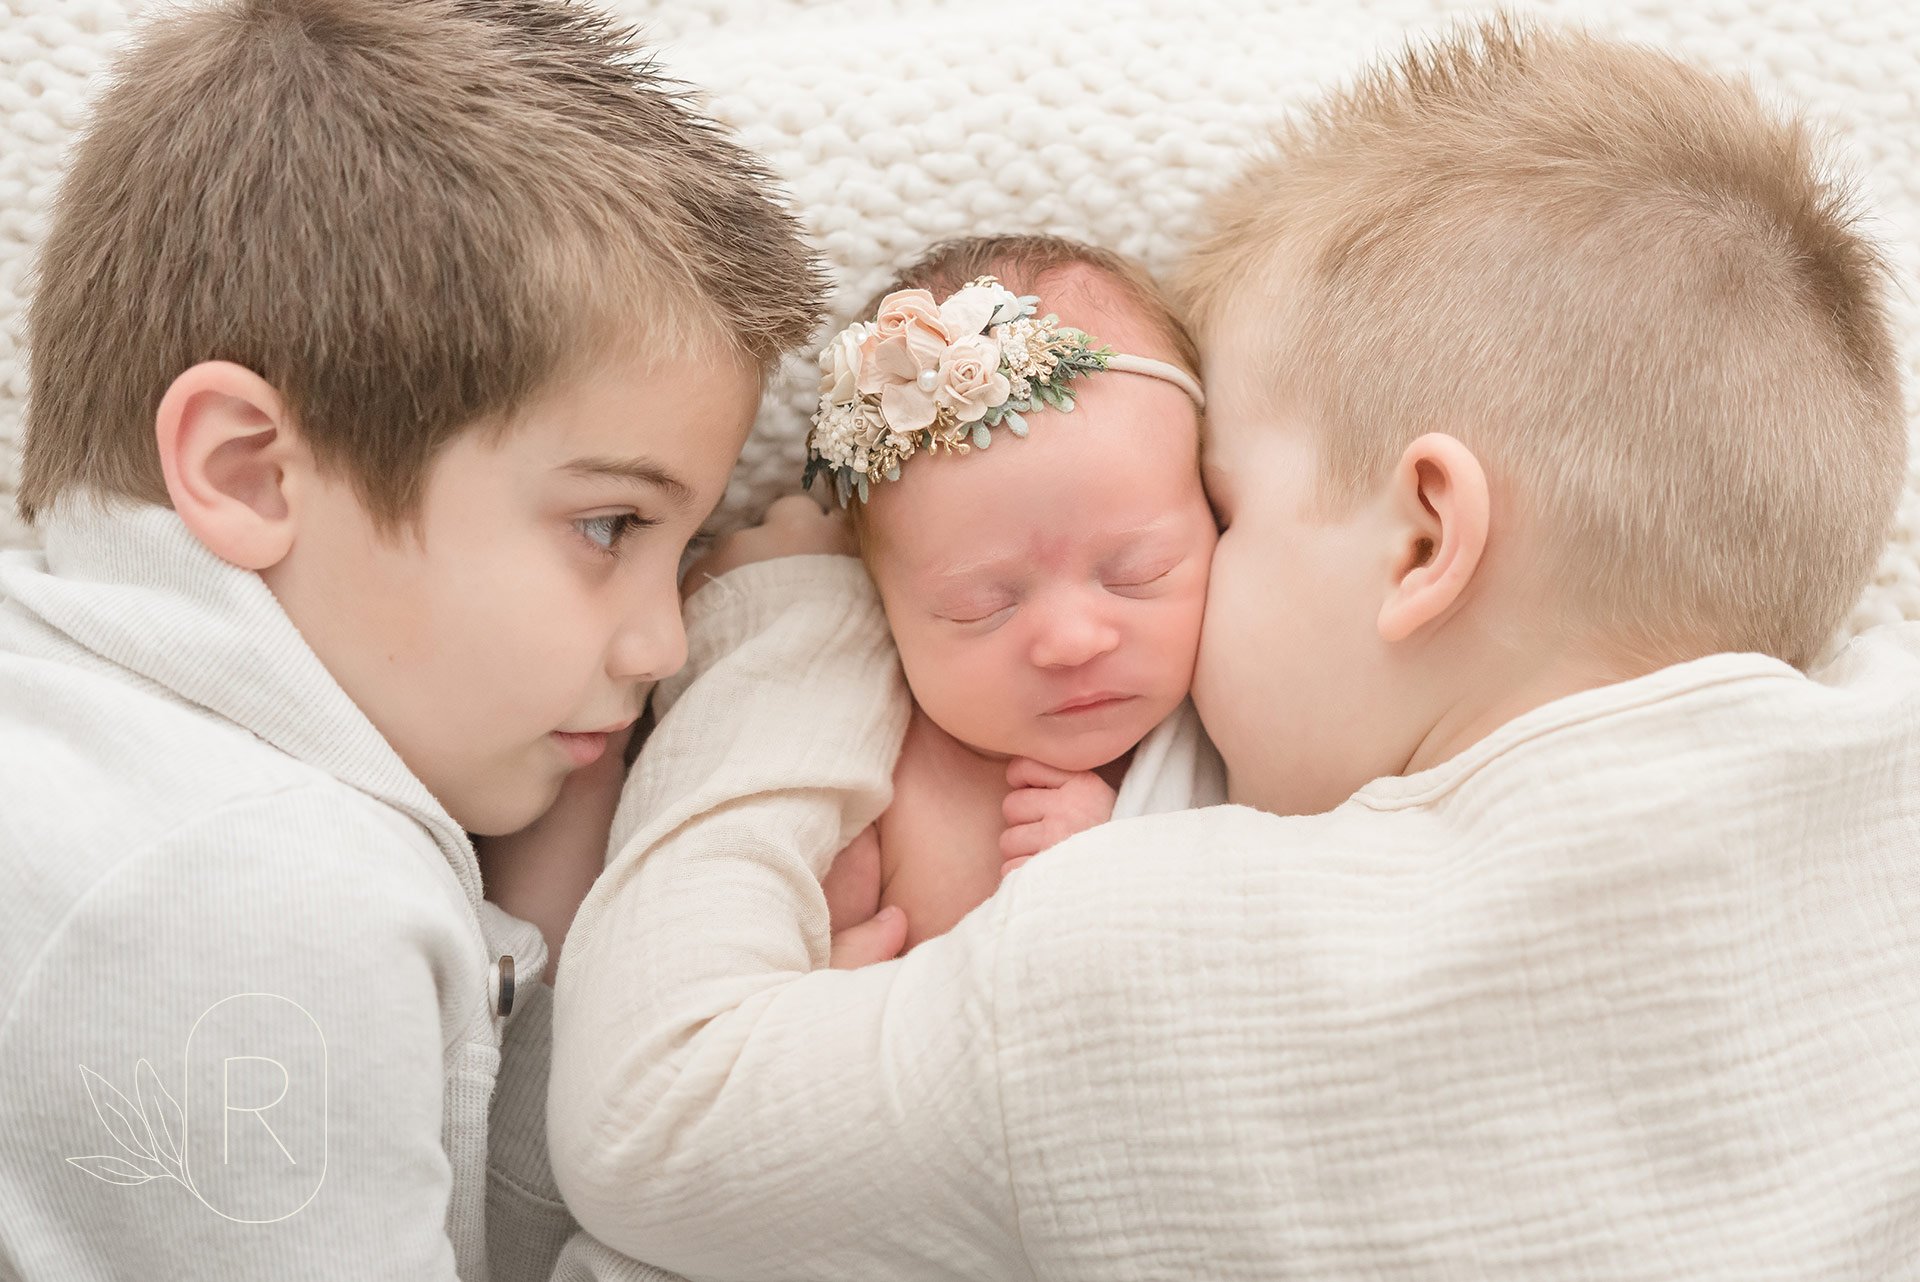 sleepy-newborn-with-siblings-cuddling-moment-family-photography-niagara-ontario.jpg